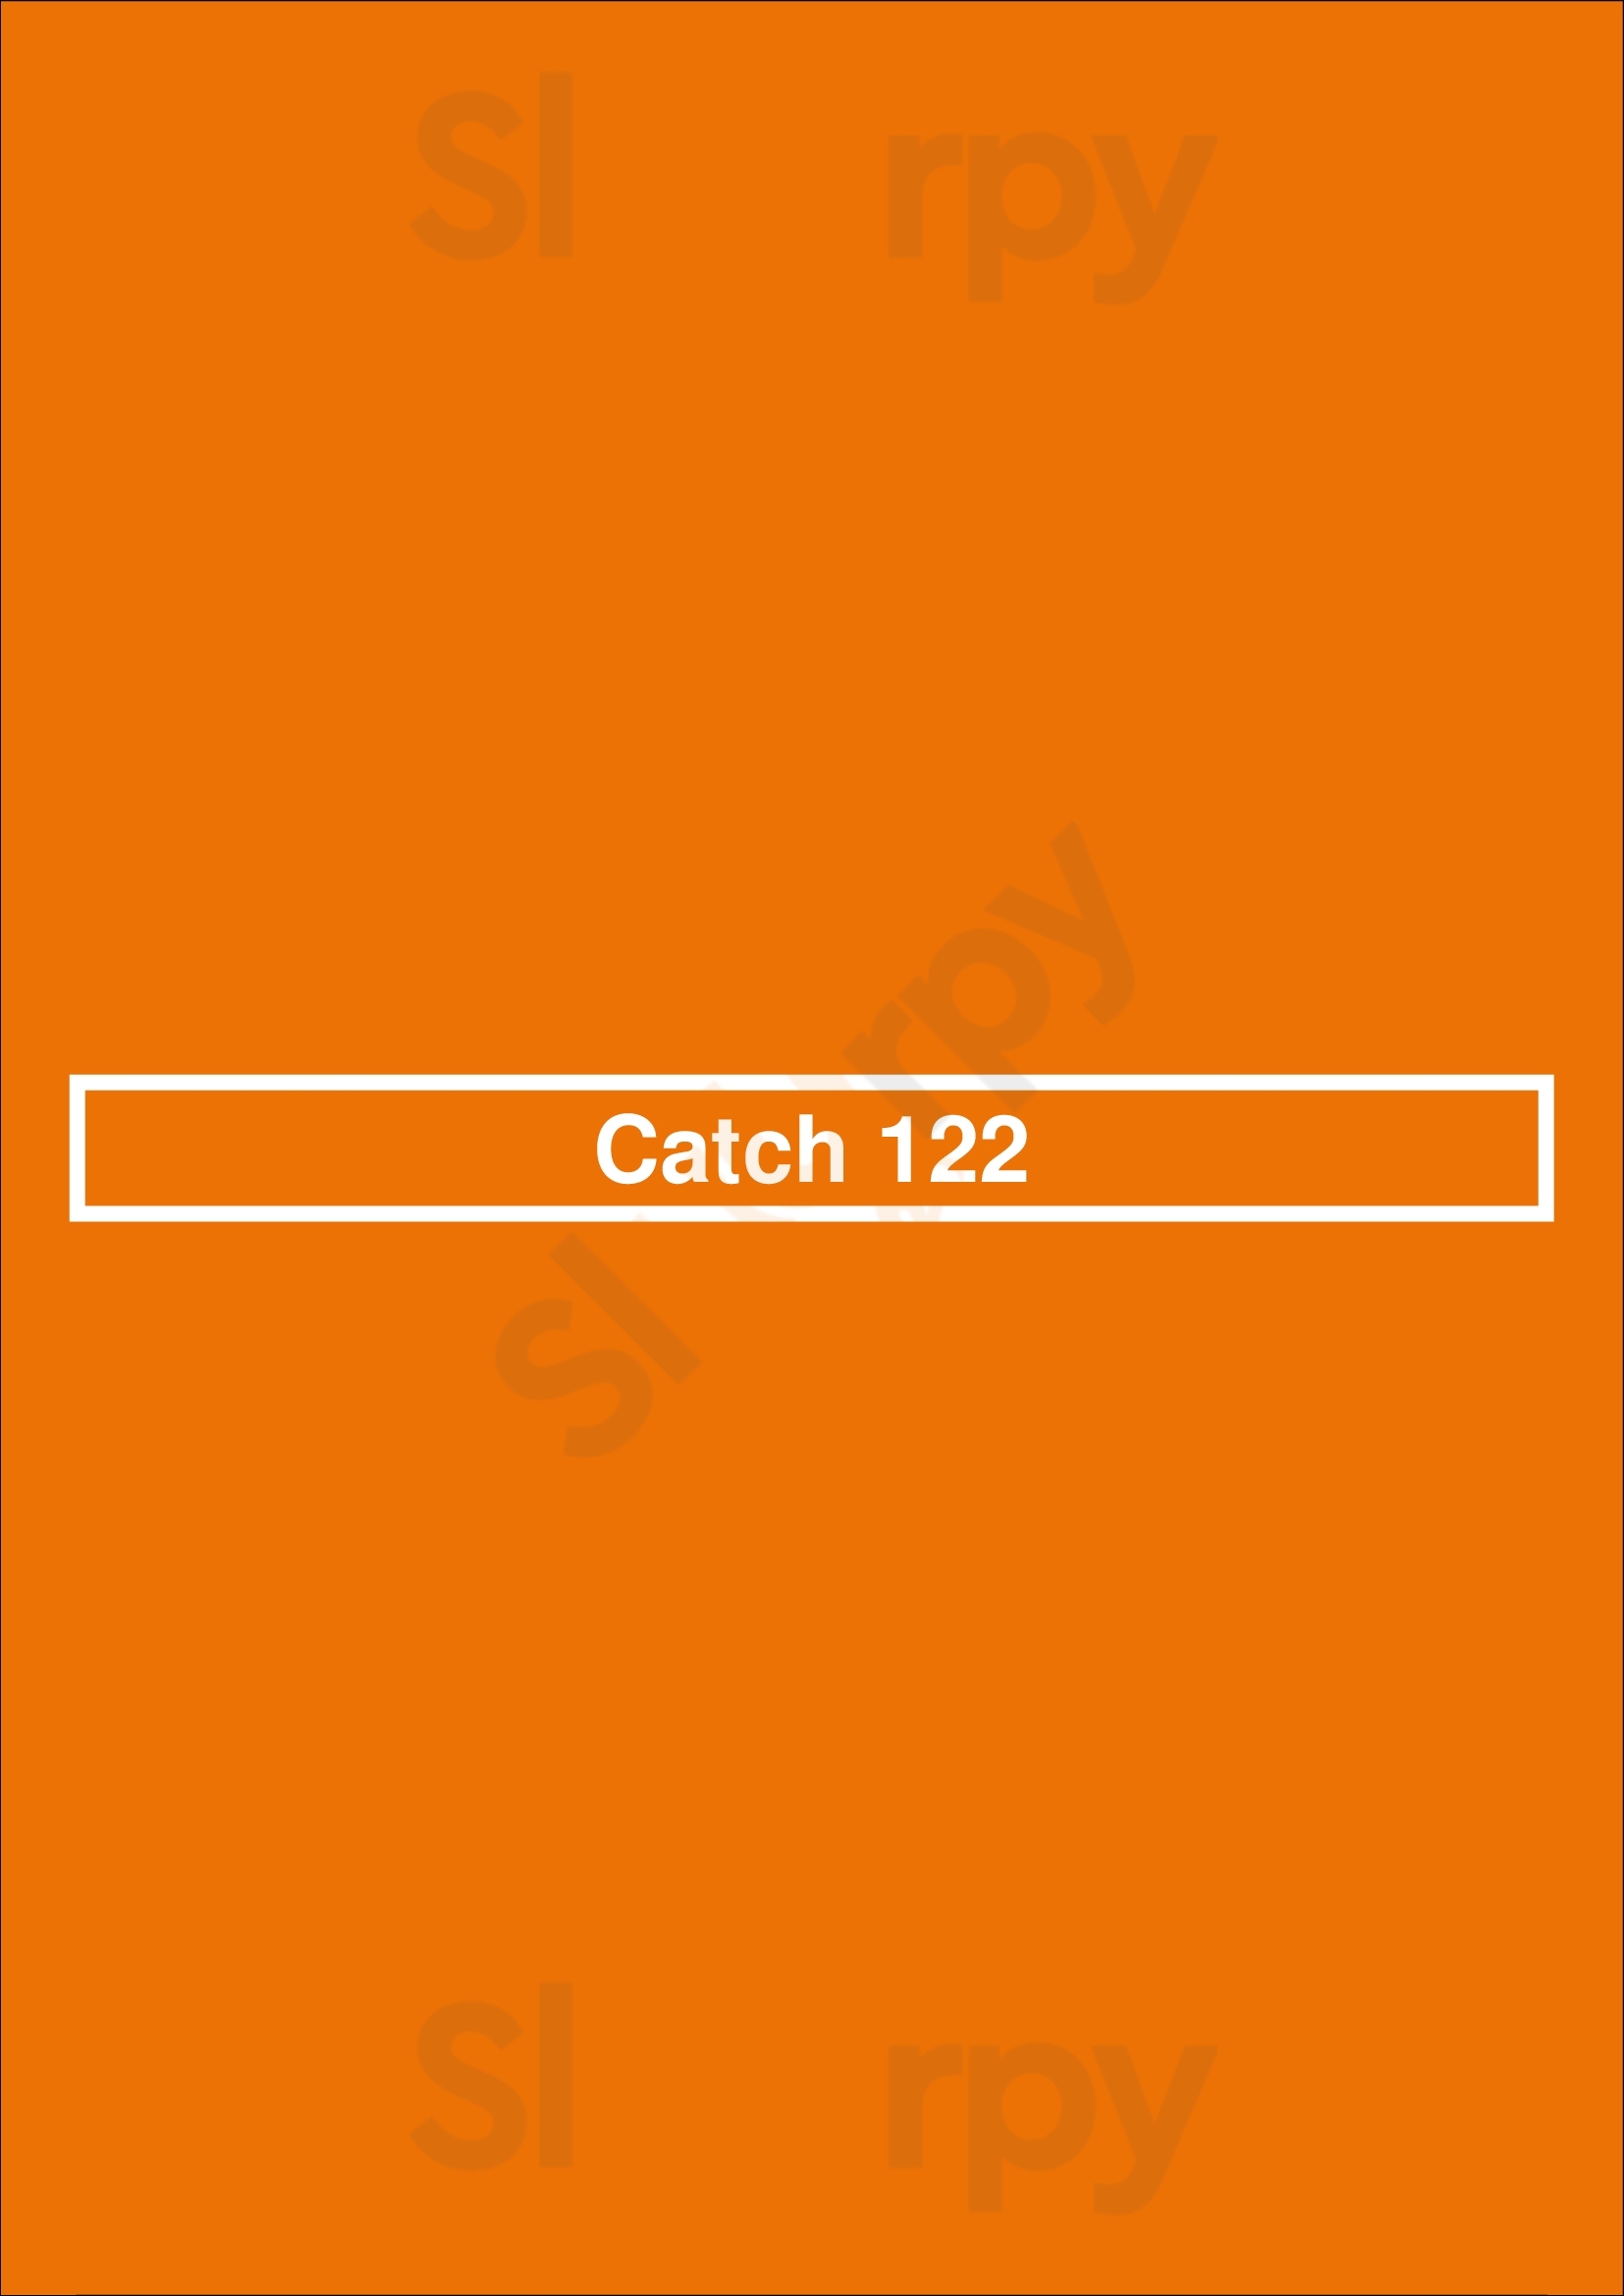 Catch 122 North Vancouver Menu - 1